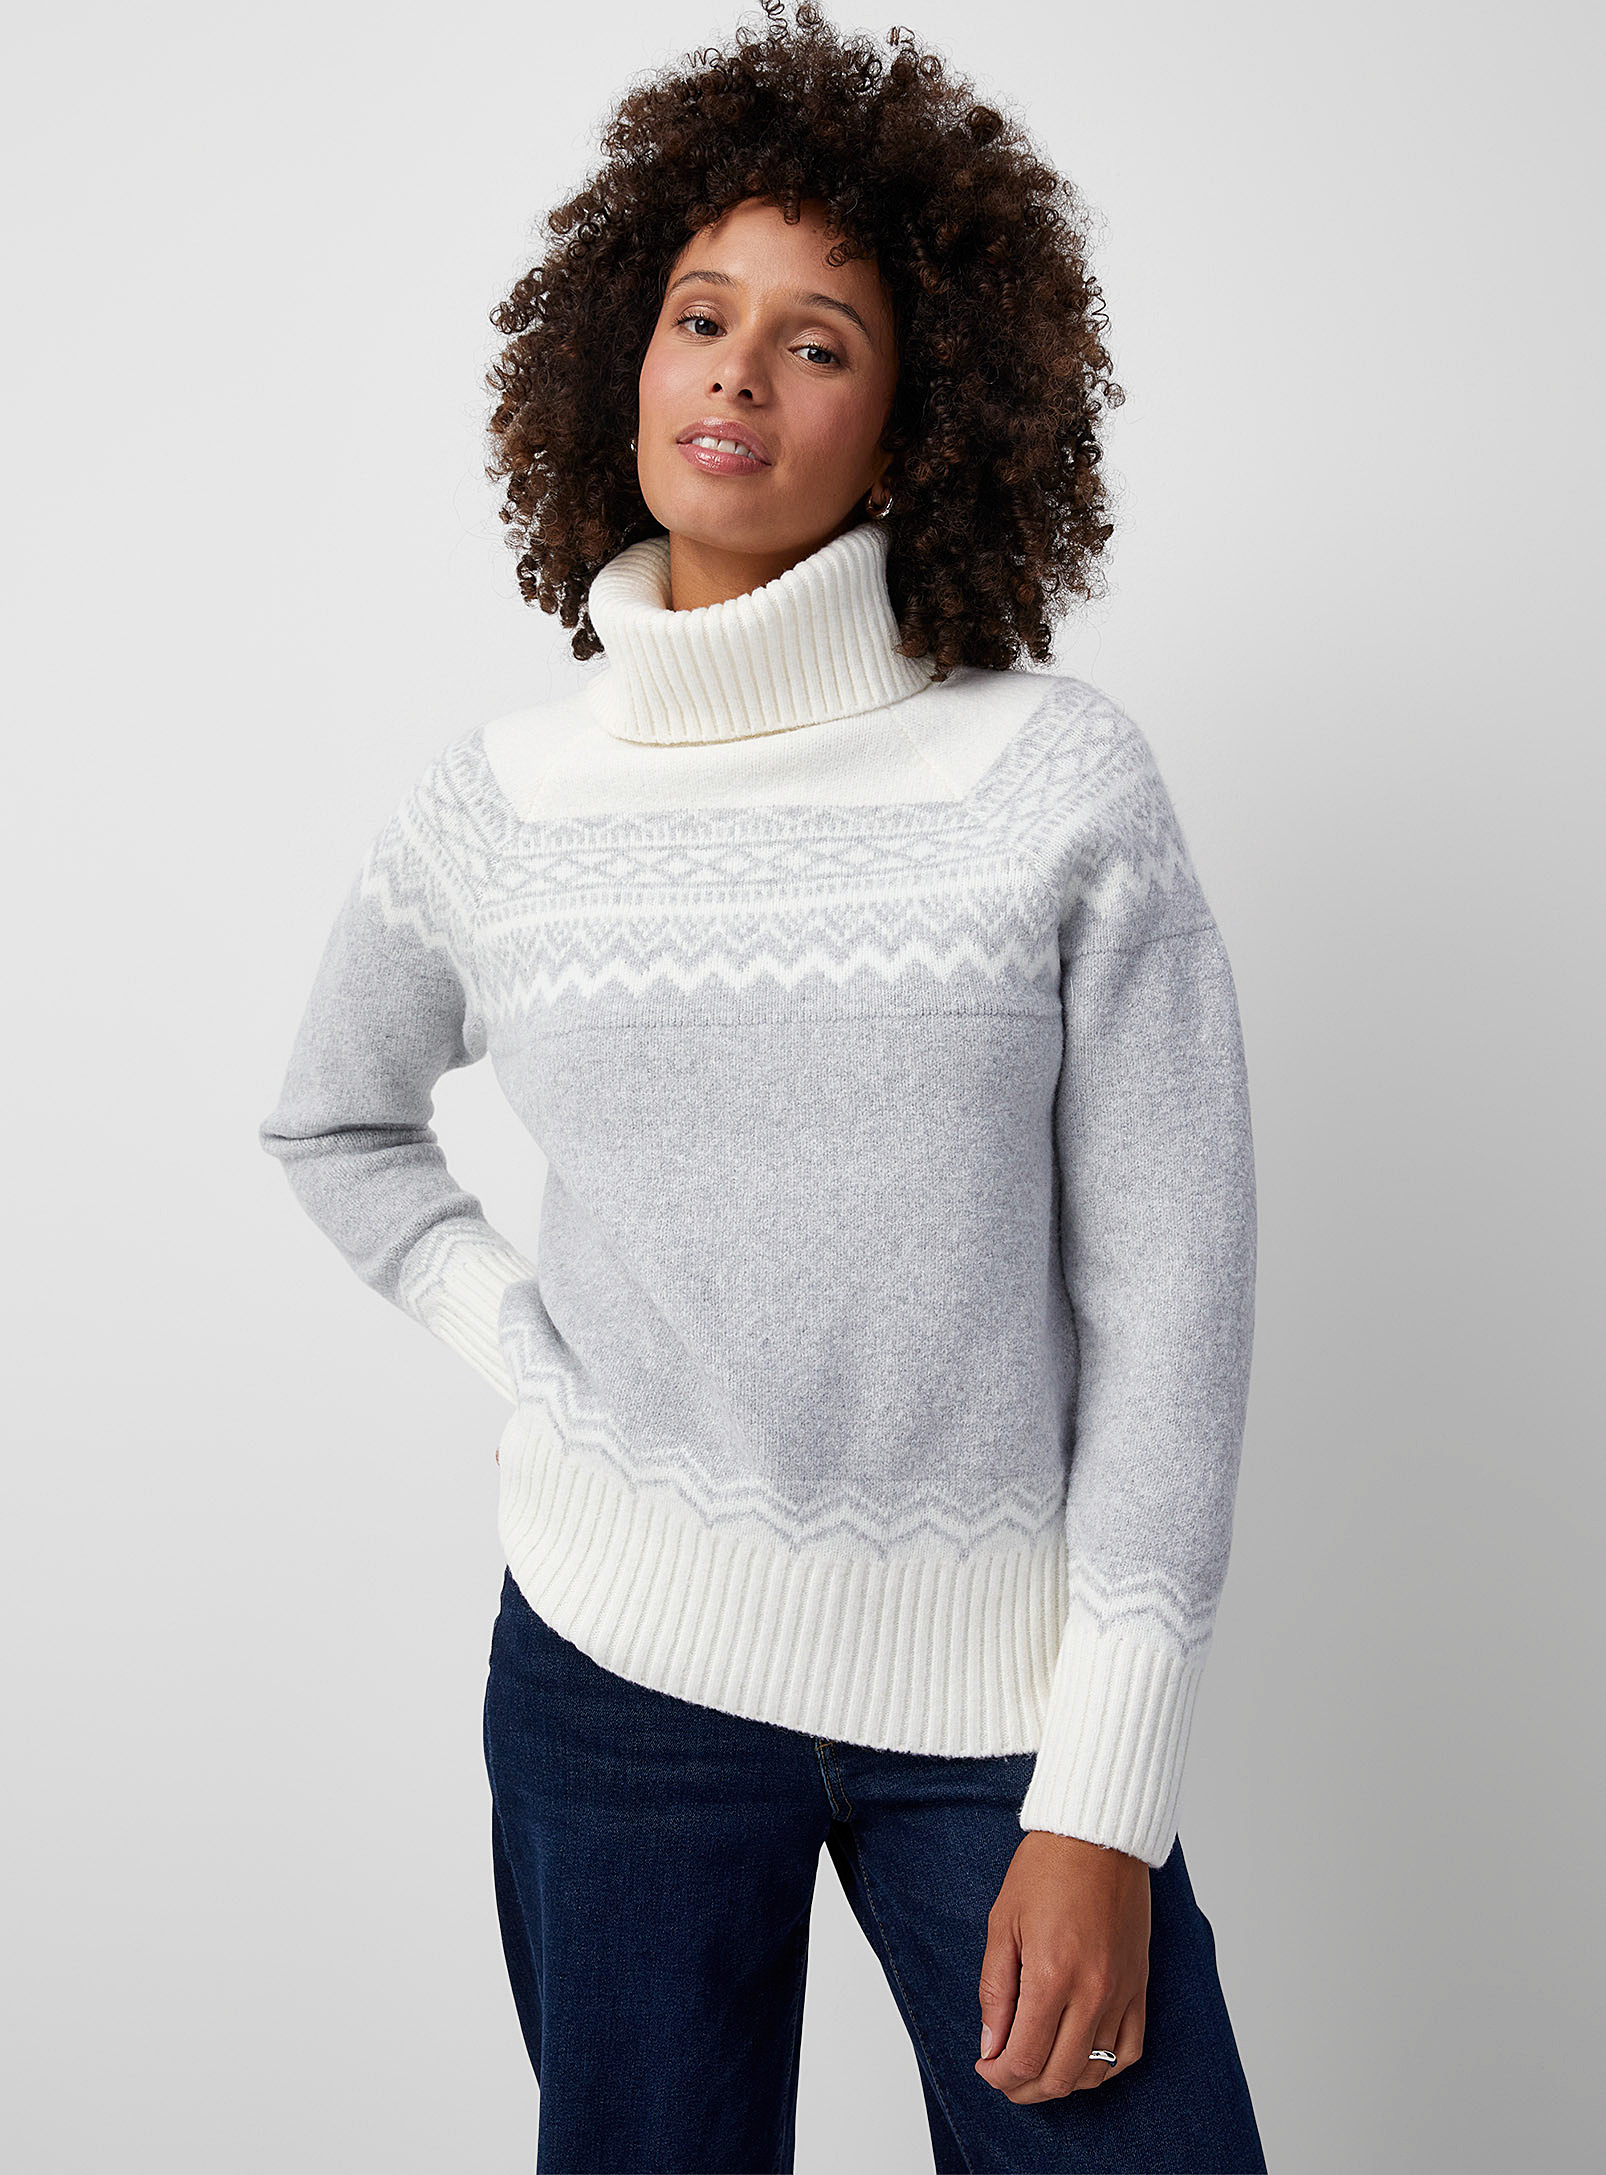 Contemporaine - Women's Nordic jacquard Turtleneck Sweater